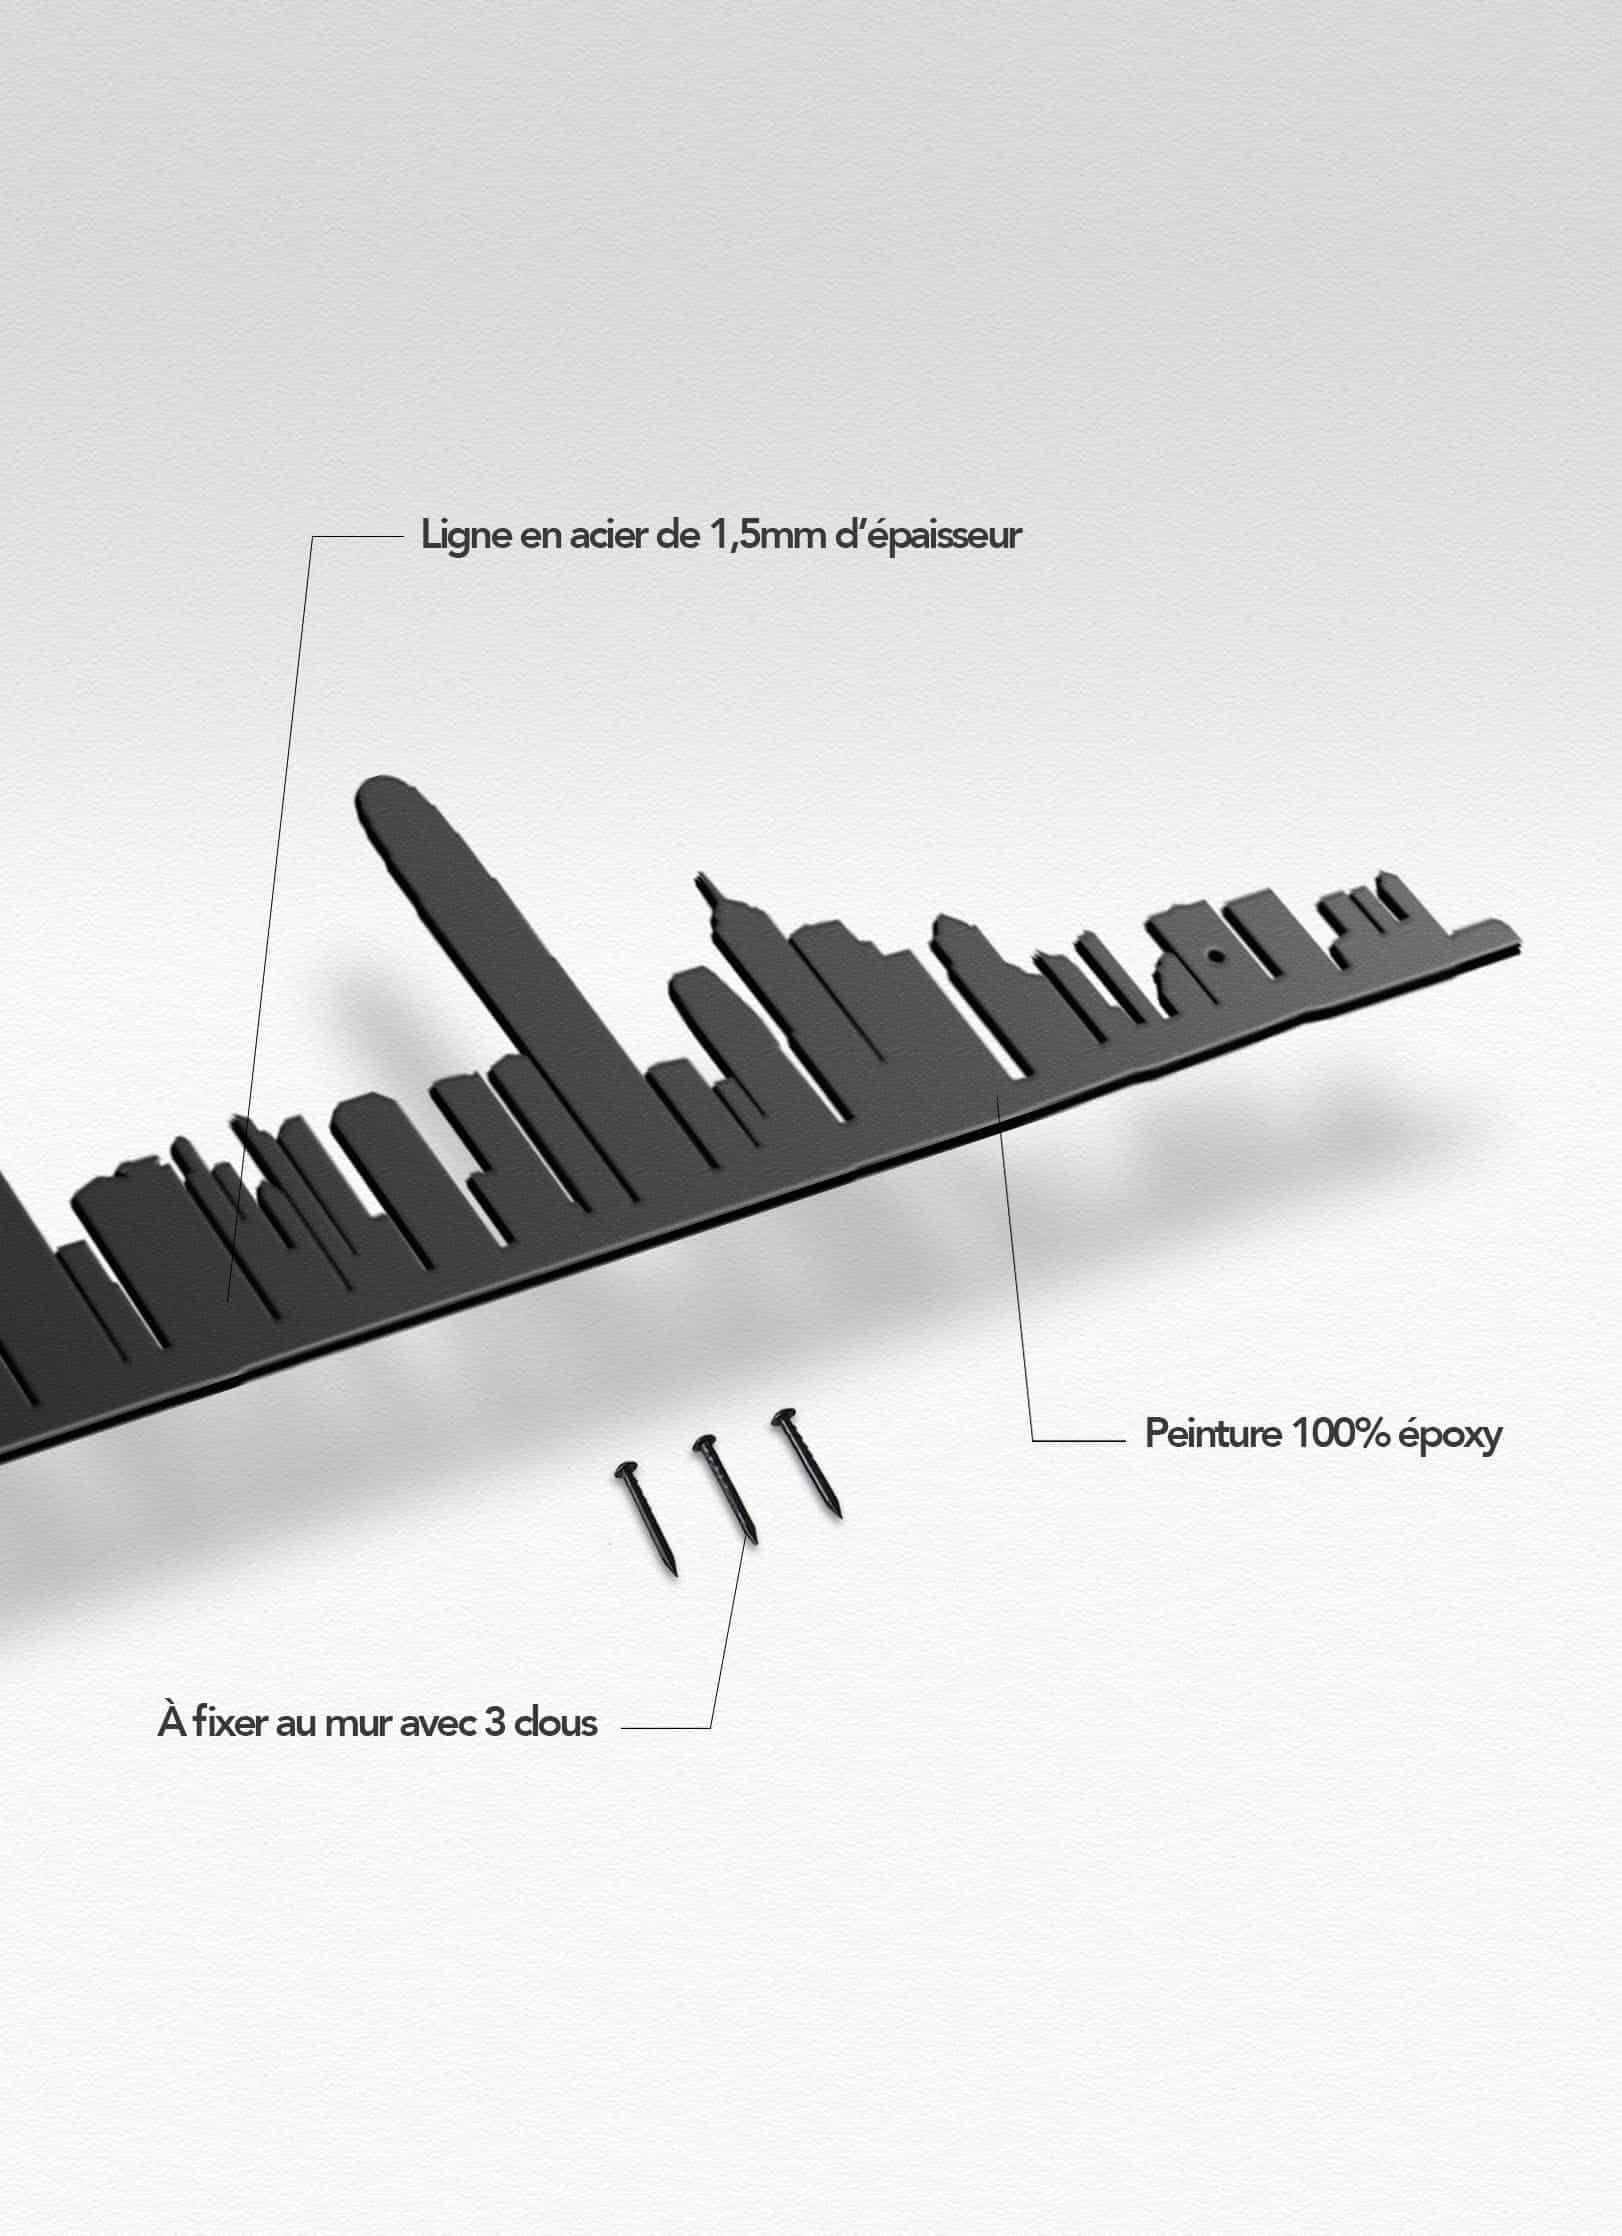 Presentation of the skyline of Hong-Kong